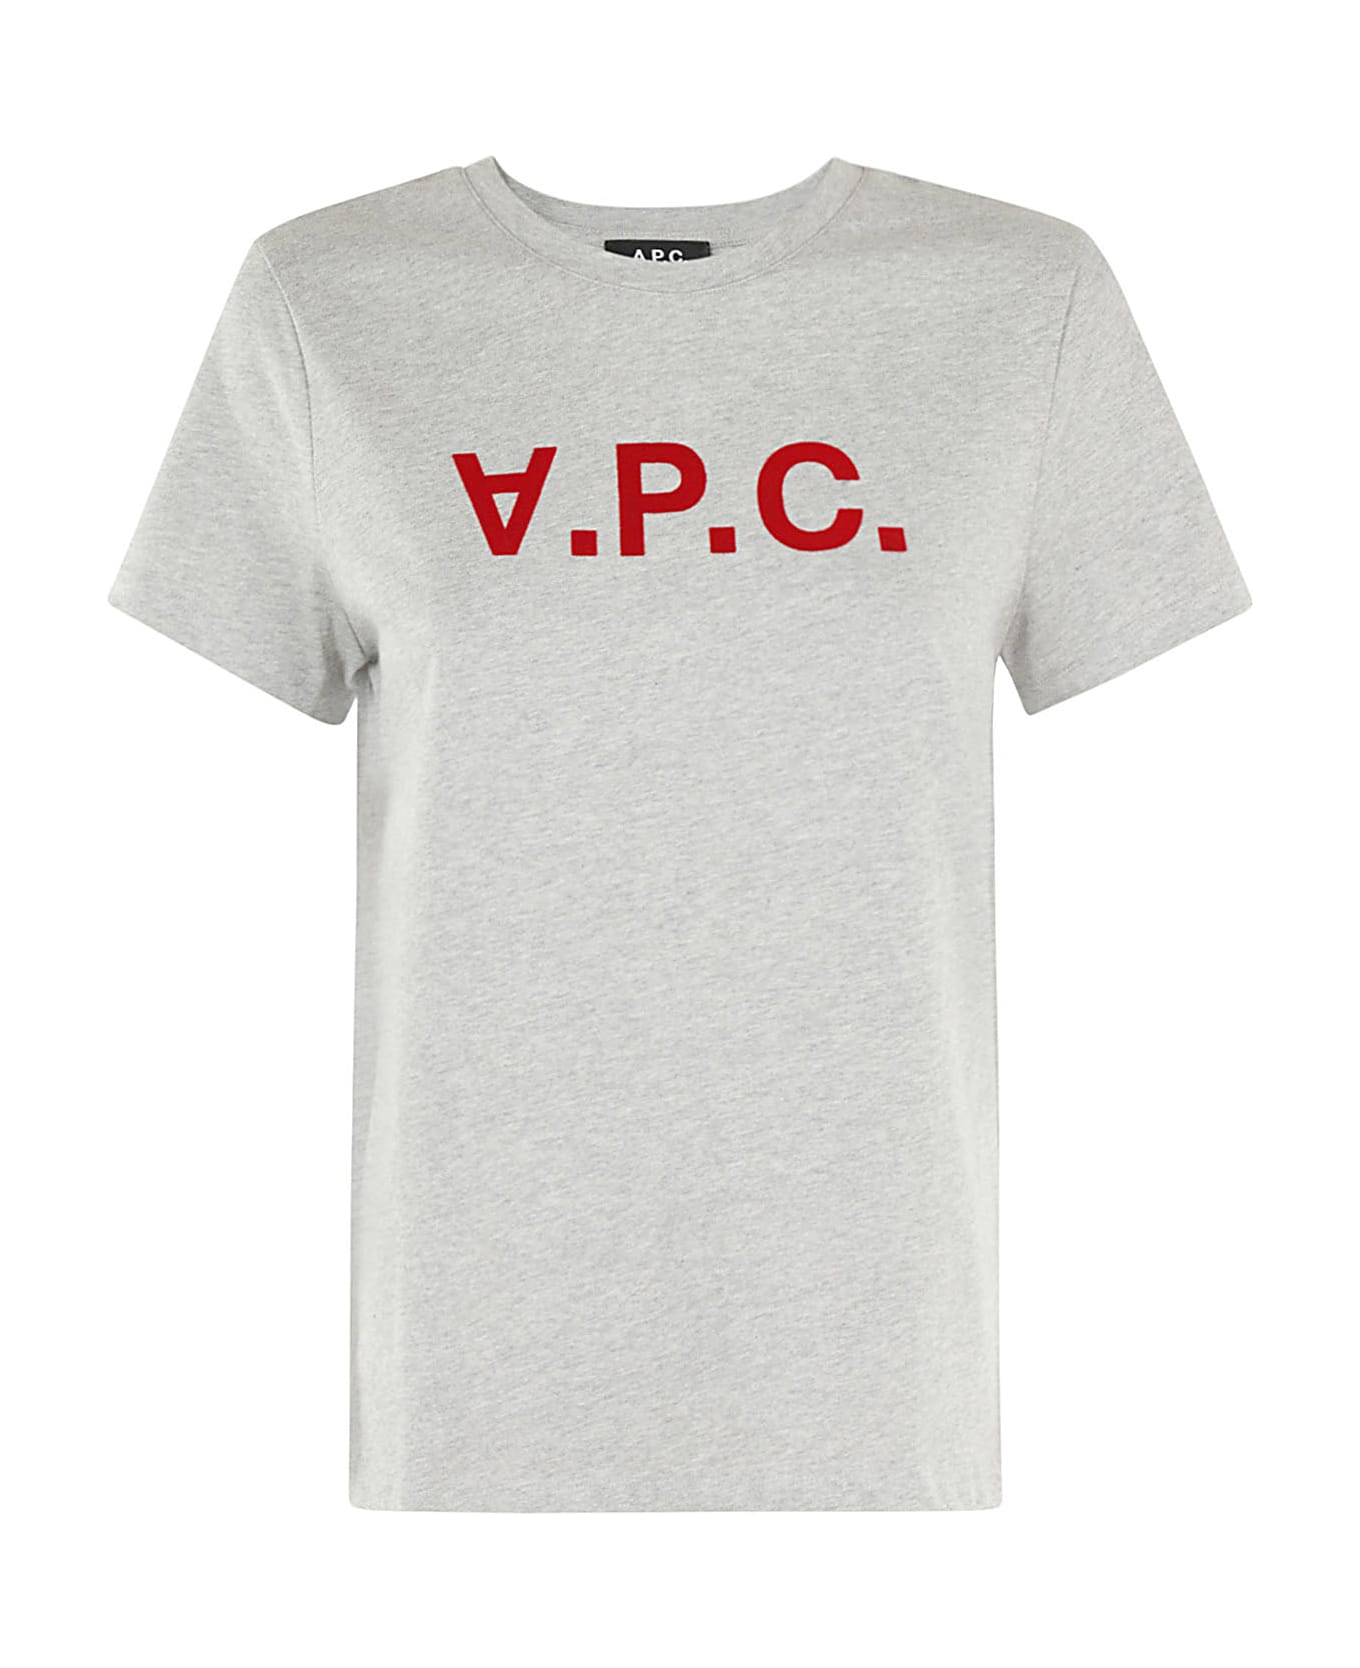 A.P.C. T-shirt - Gris Clair Chine Rouge